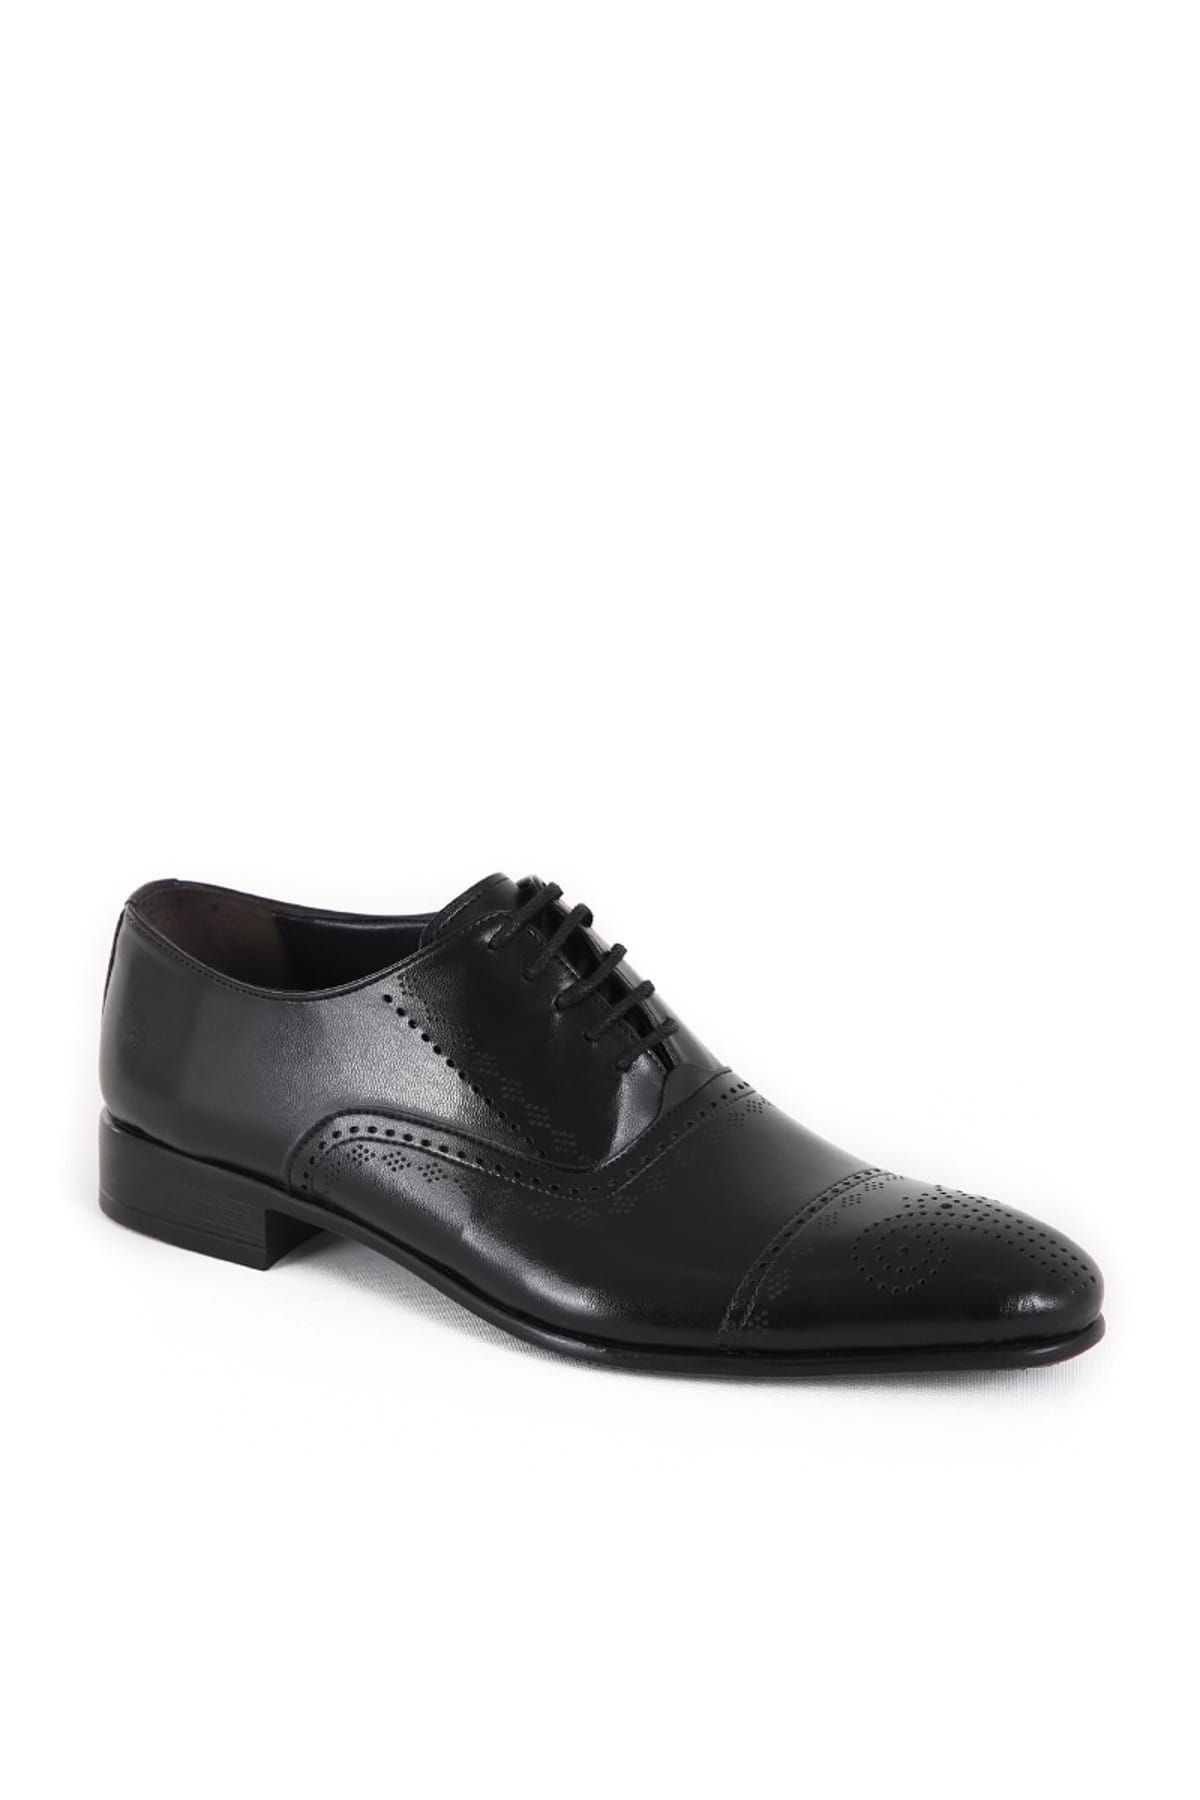 Muggo Siyah Erkek Klasik Ayakkabı DPRMGM0154001